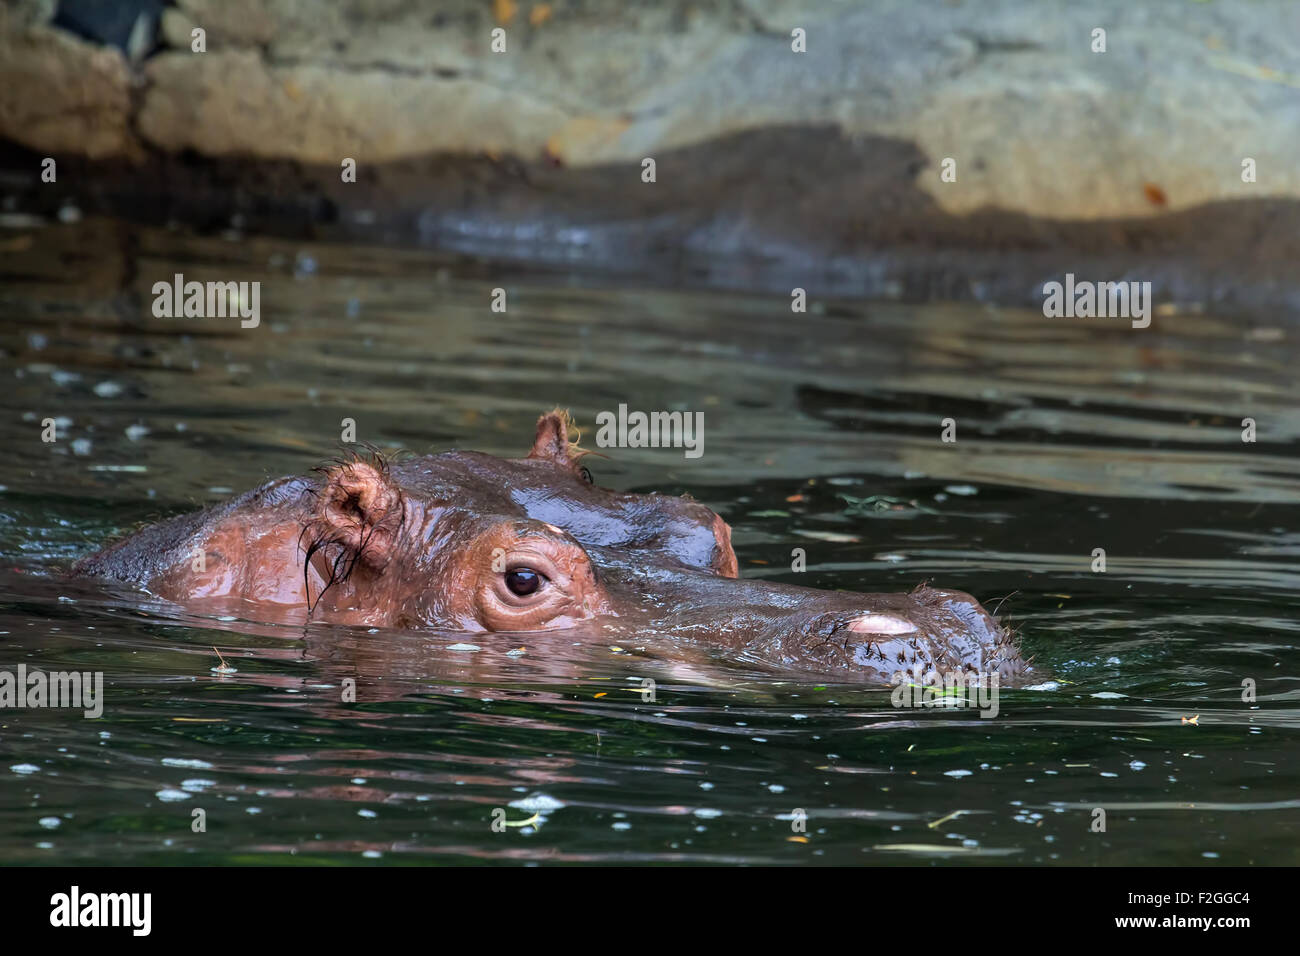 Hippopotamus Submerged in Water Closeup Portrait Stock Photo